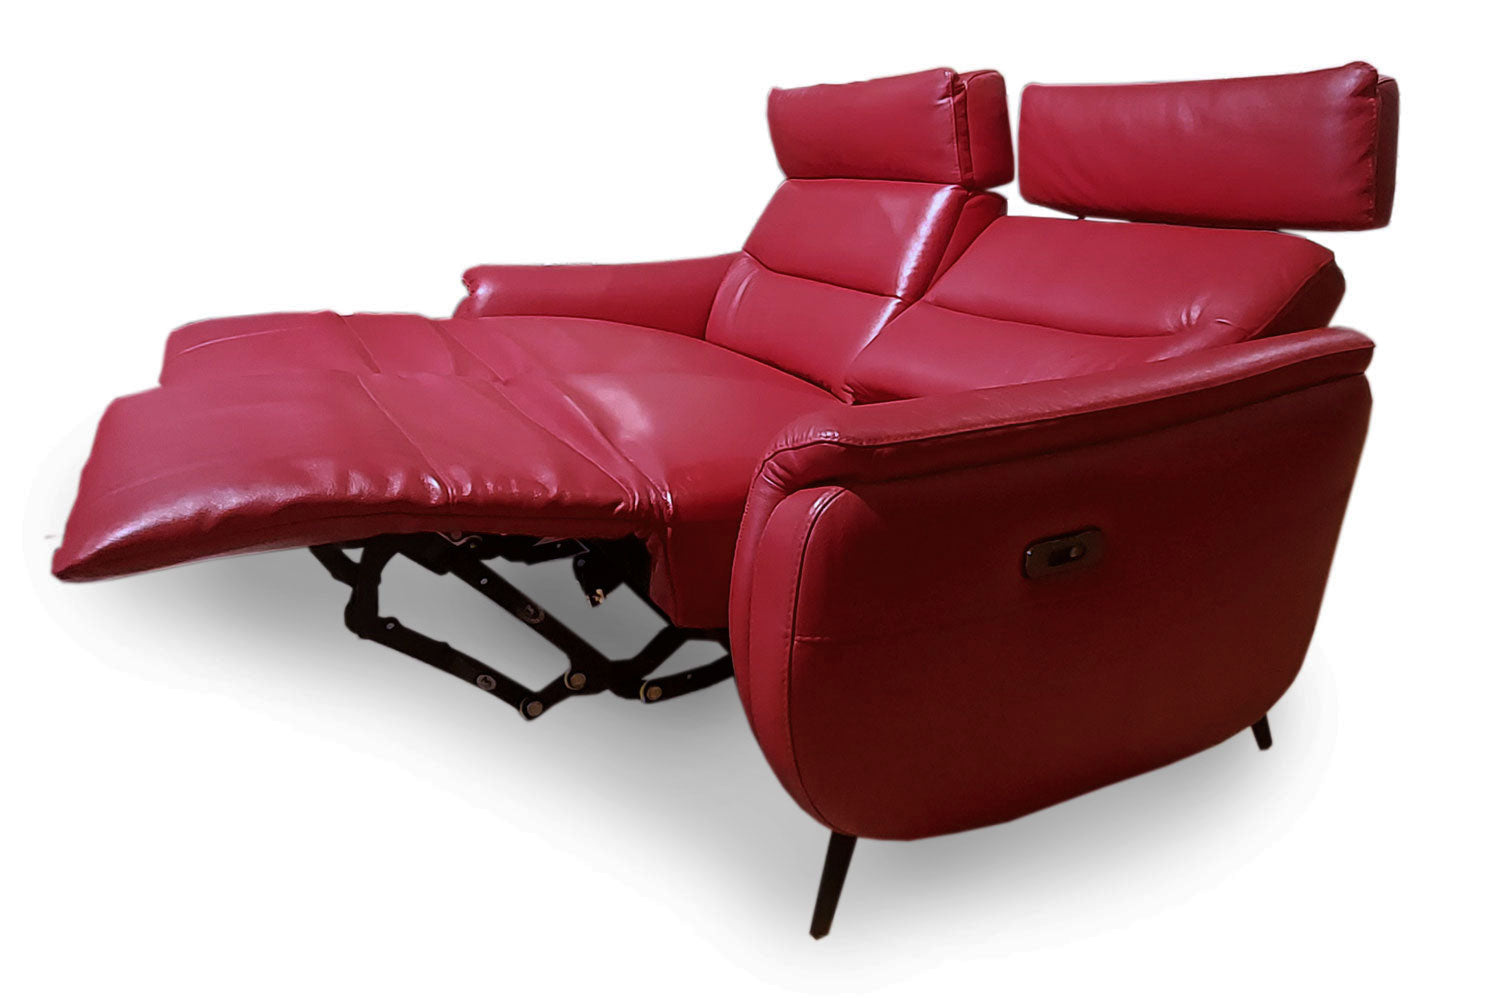 Ettore 2 Seater Leather Recliner Sofa